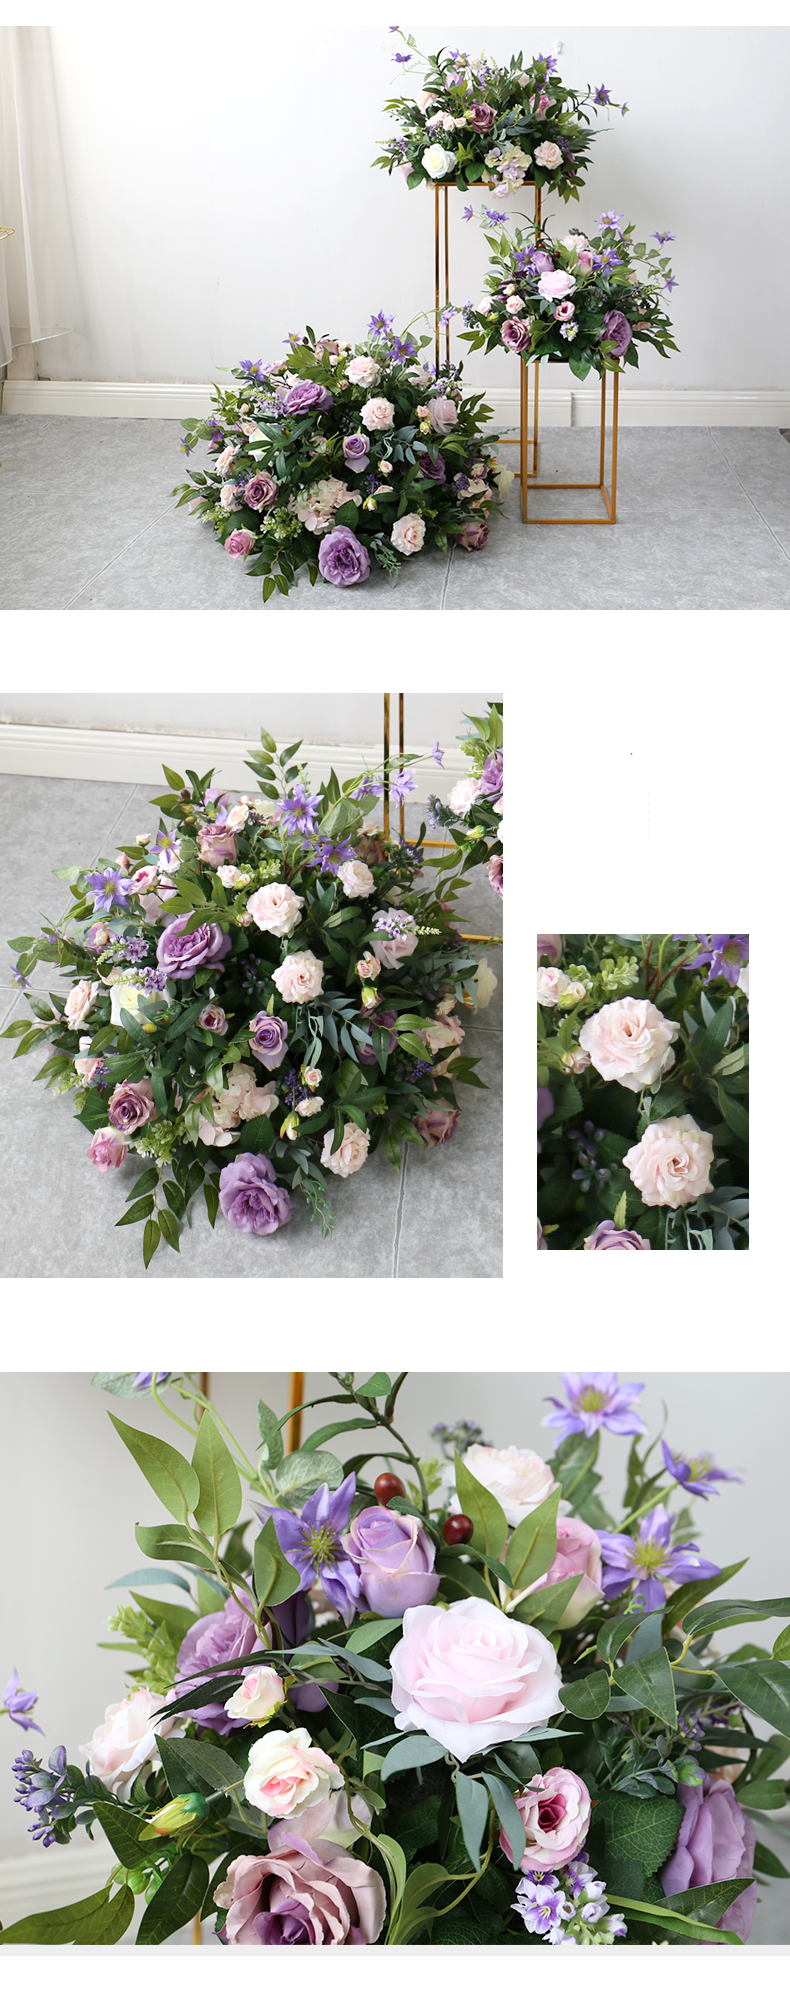  White Rose Road Lead Flower Ball Wedding Decorative 